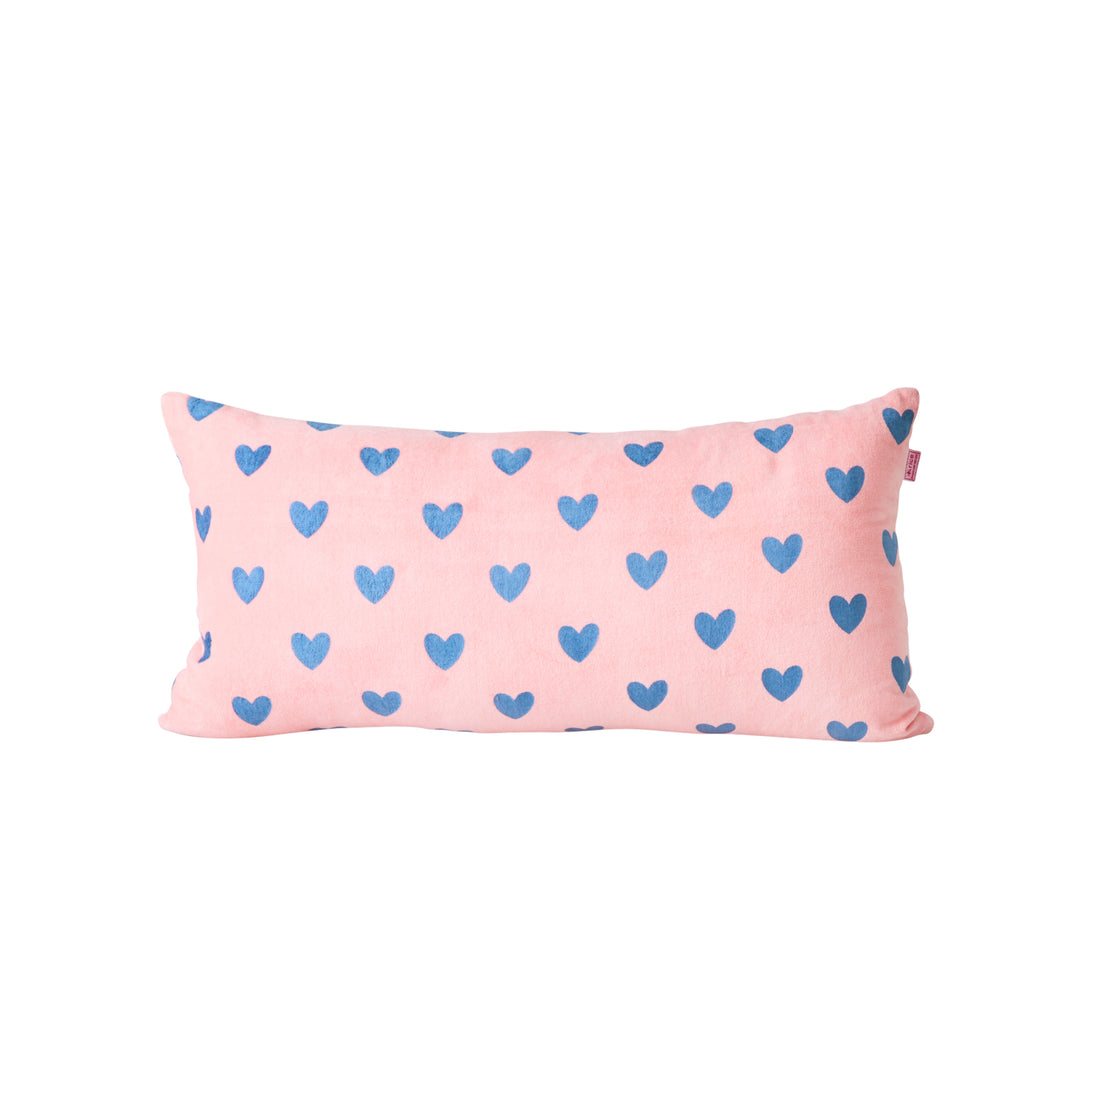 rice-dk-velvet-rectangular-pillow-in-pink-with-gendarme-blue-hearts-medium-pink-and-gendarme-blue-rice-csrec-mheai-